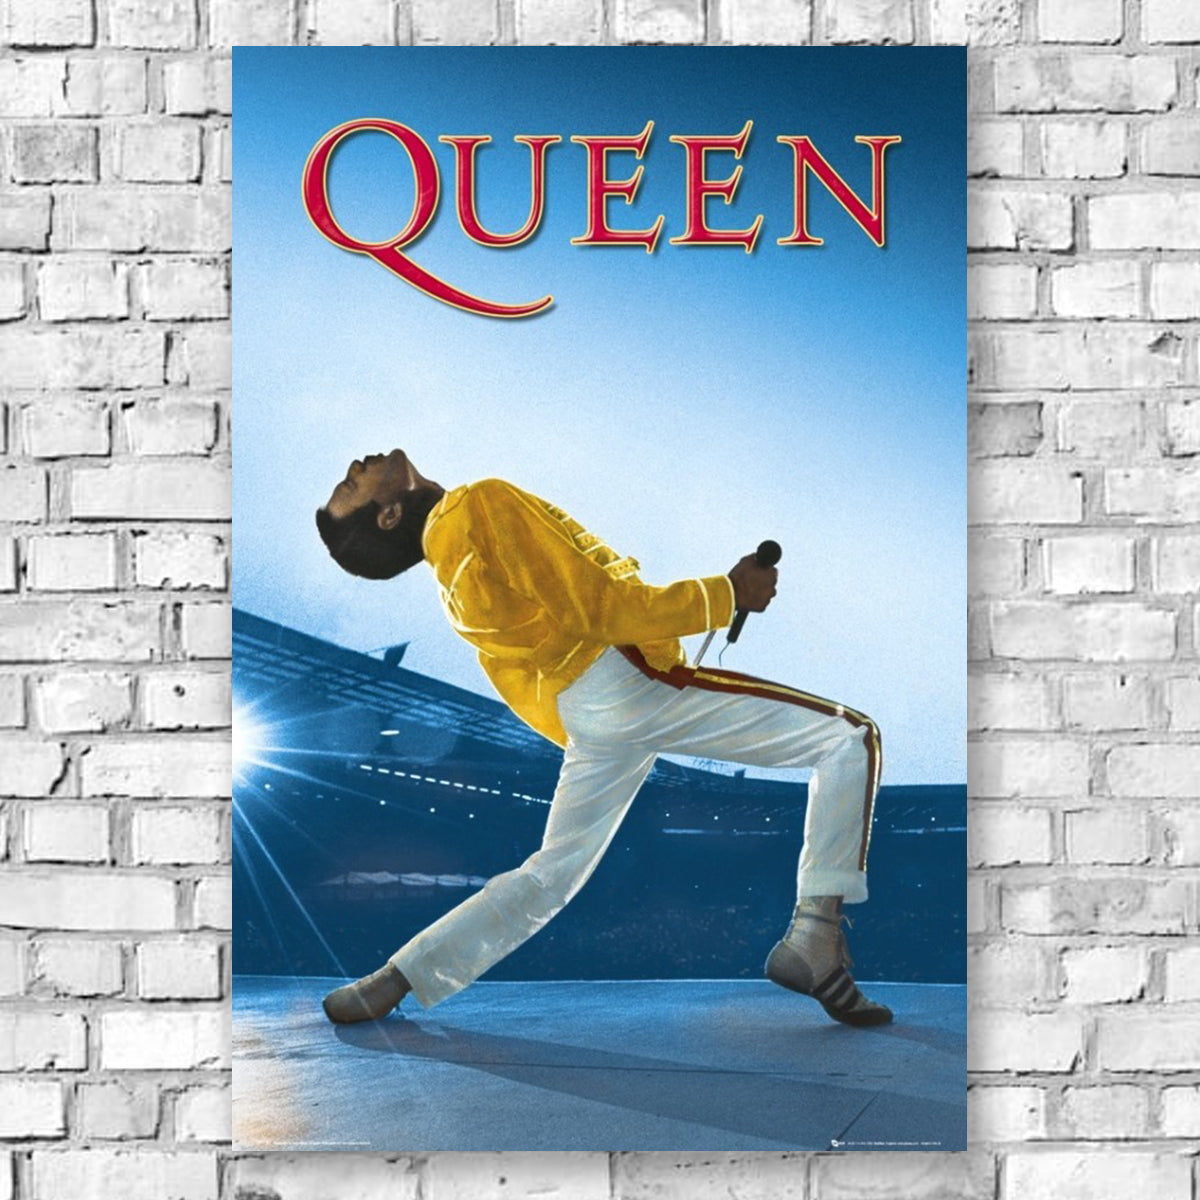 Queen Live at Wembley Poster